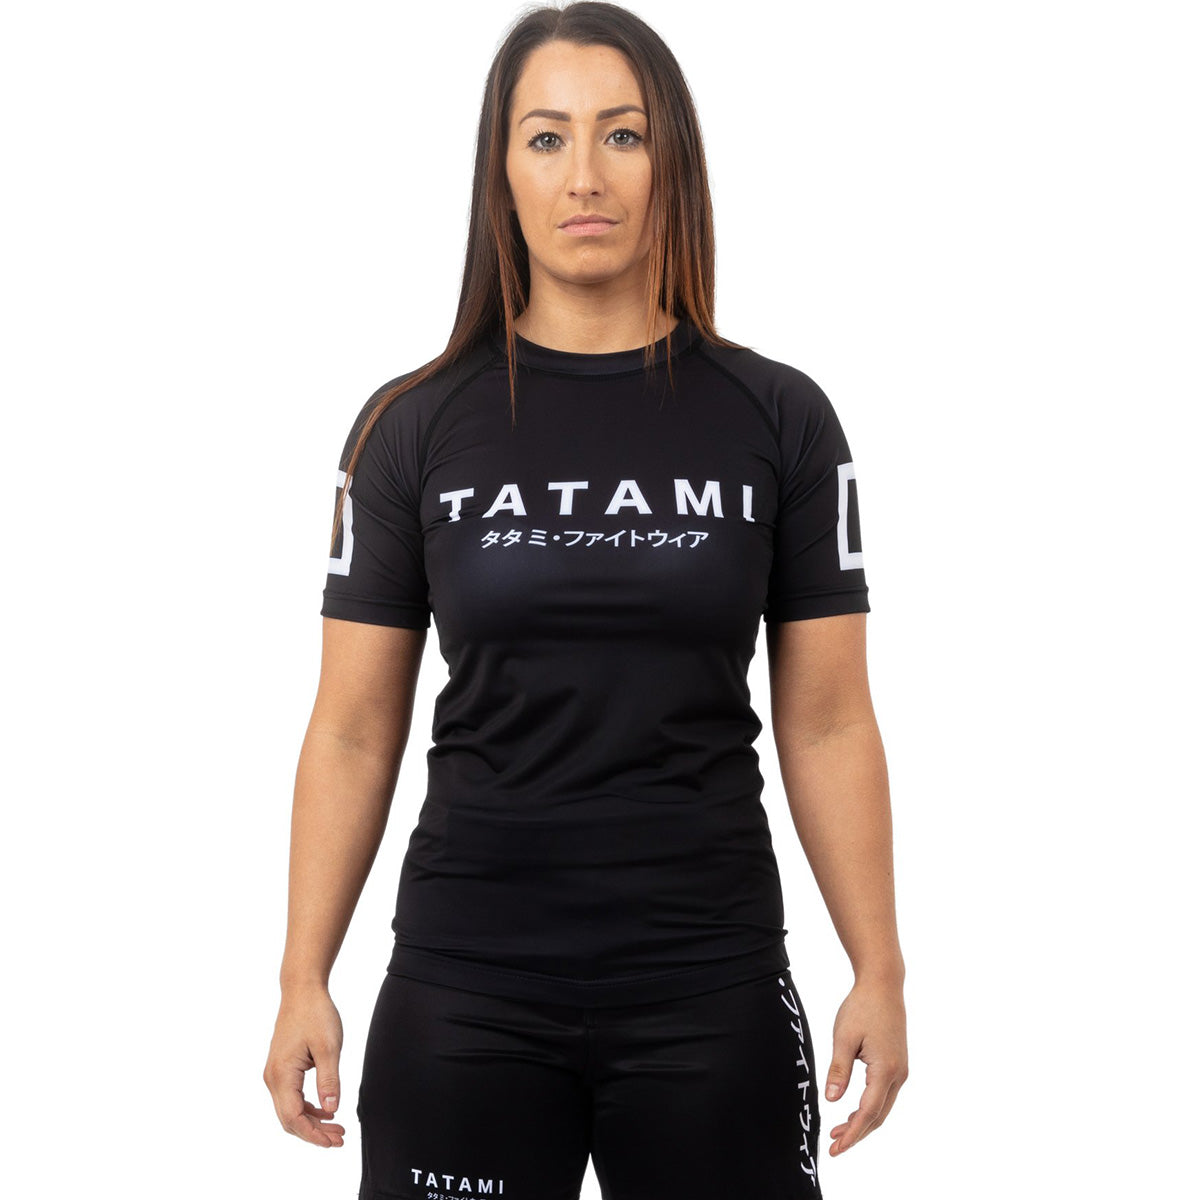 Tatami Fightwear Women's Katakana Short Sleeve Rashguard - Black Tatami Fightwear